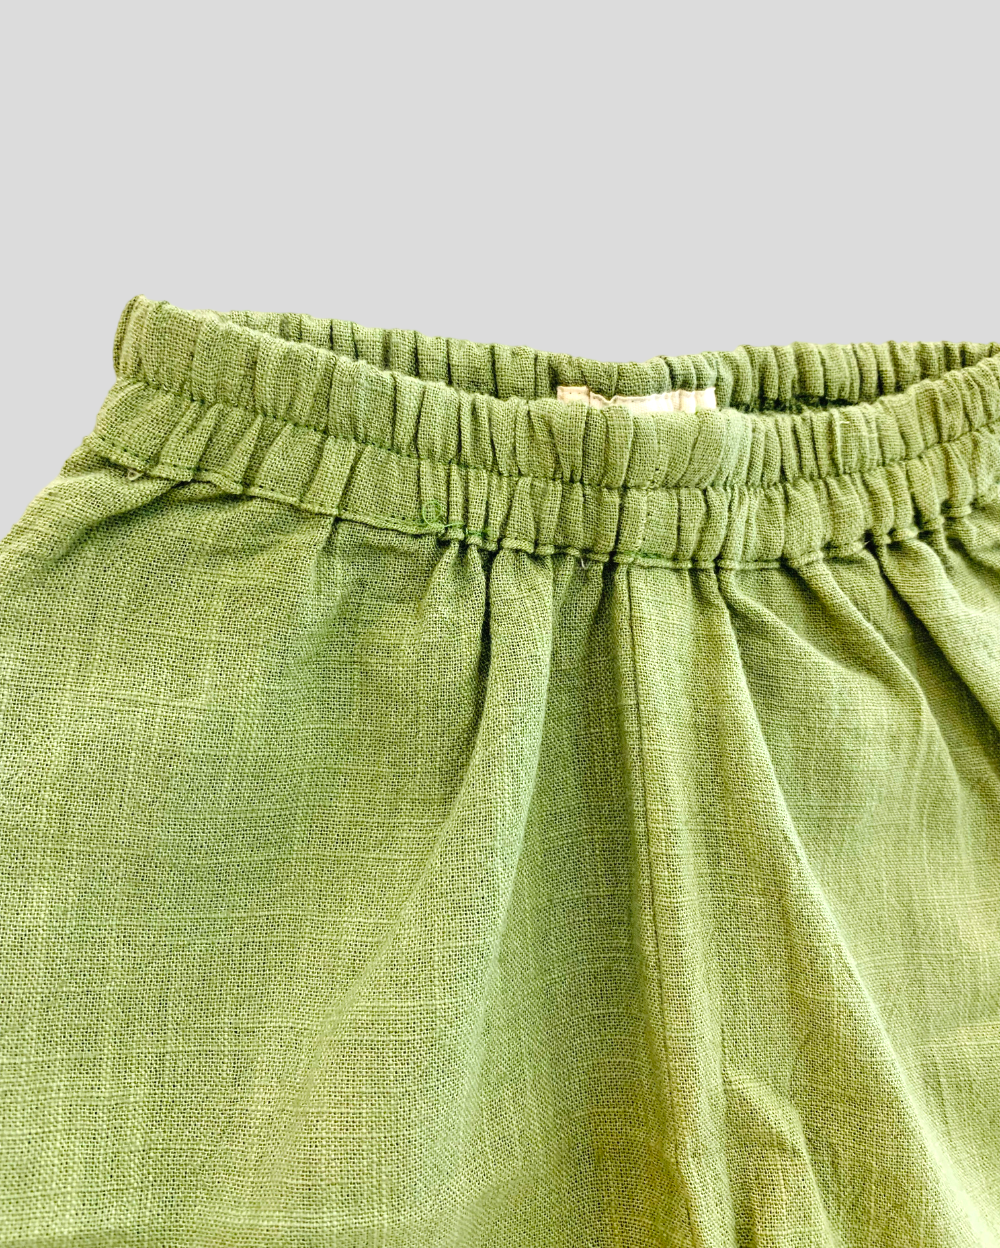 Geometric Top & Green Shorts Baby Set